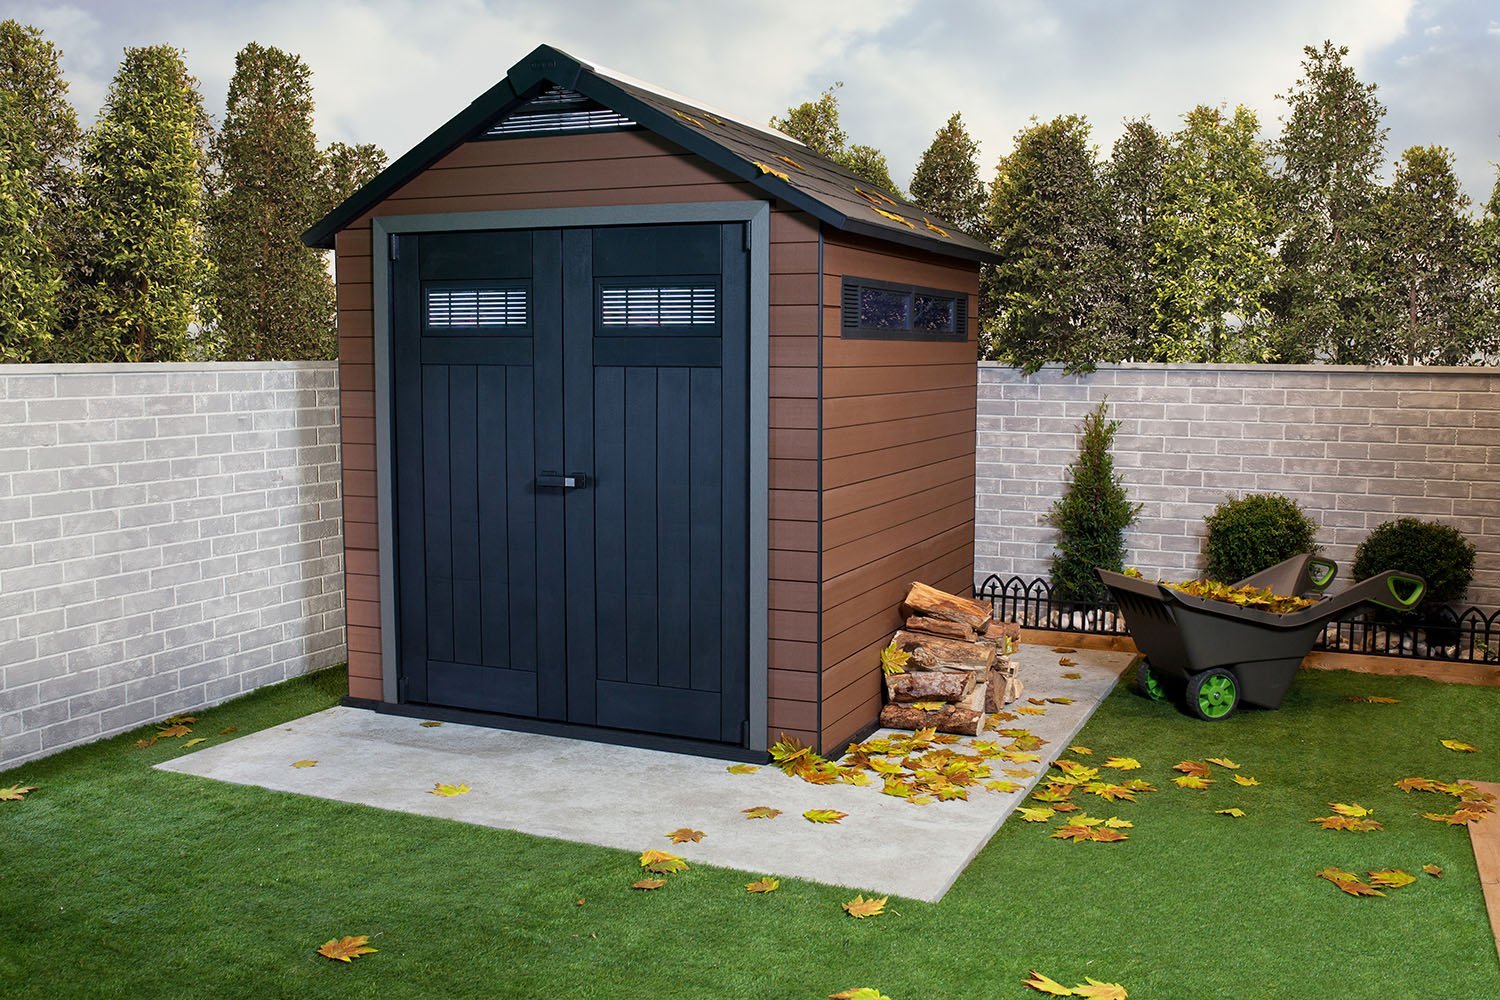 Brown-and-navy-blue-garden-shed-in-an-urban-garden-